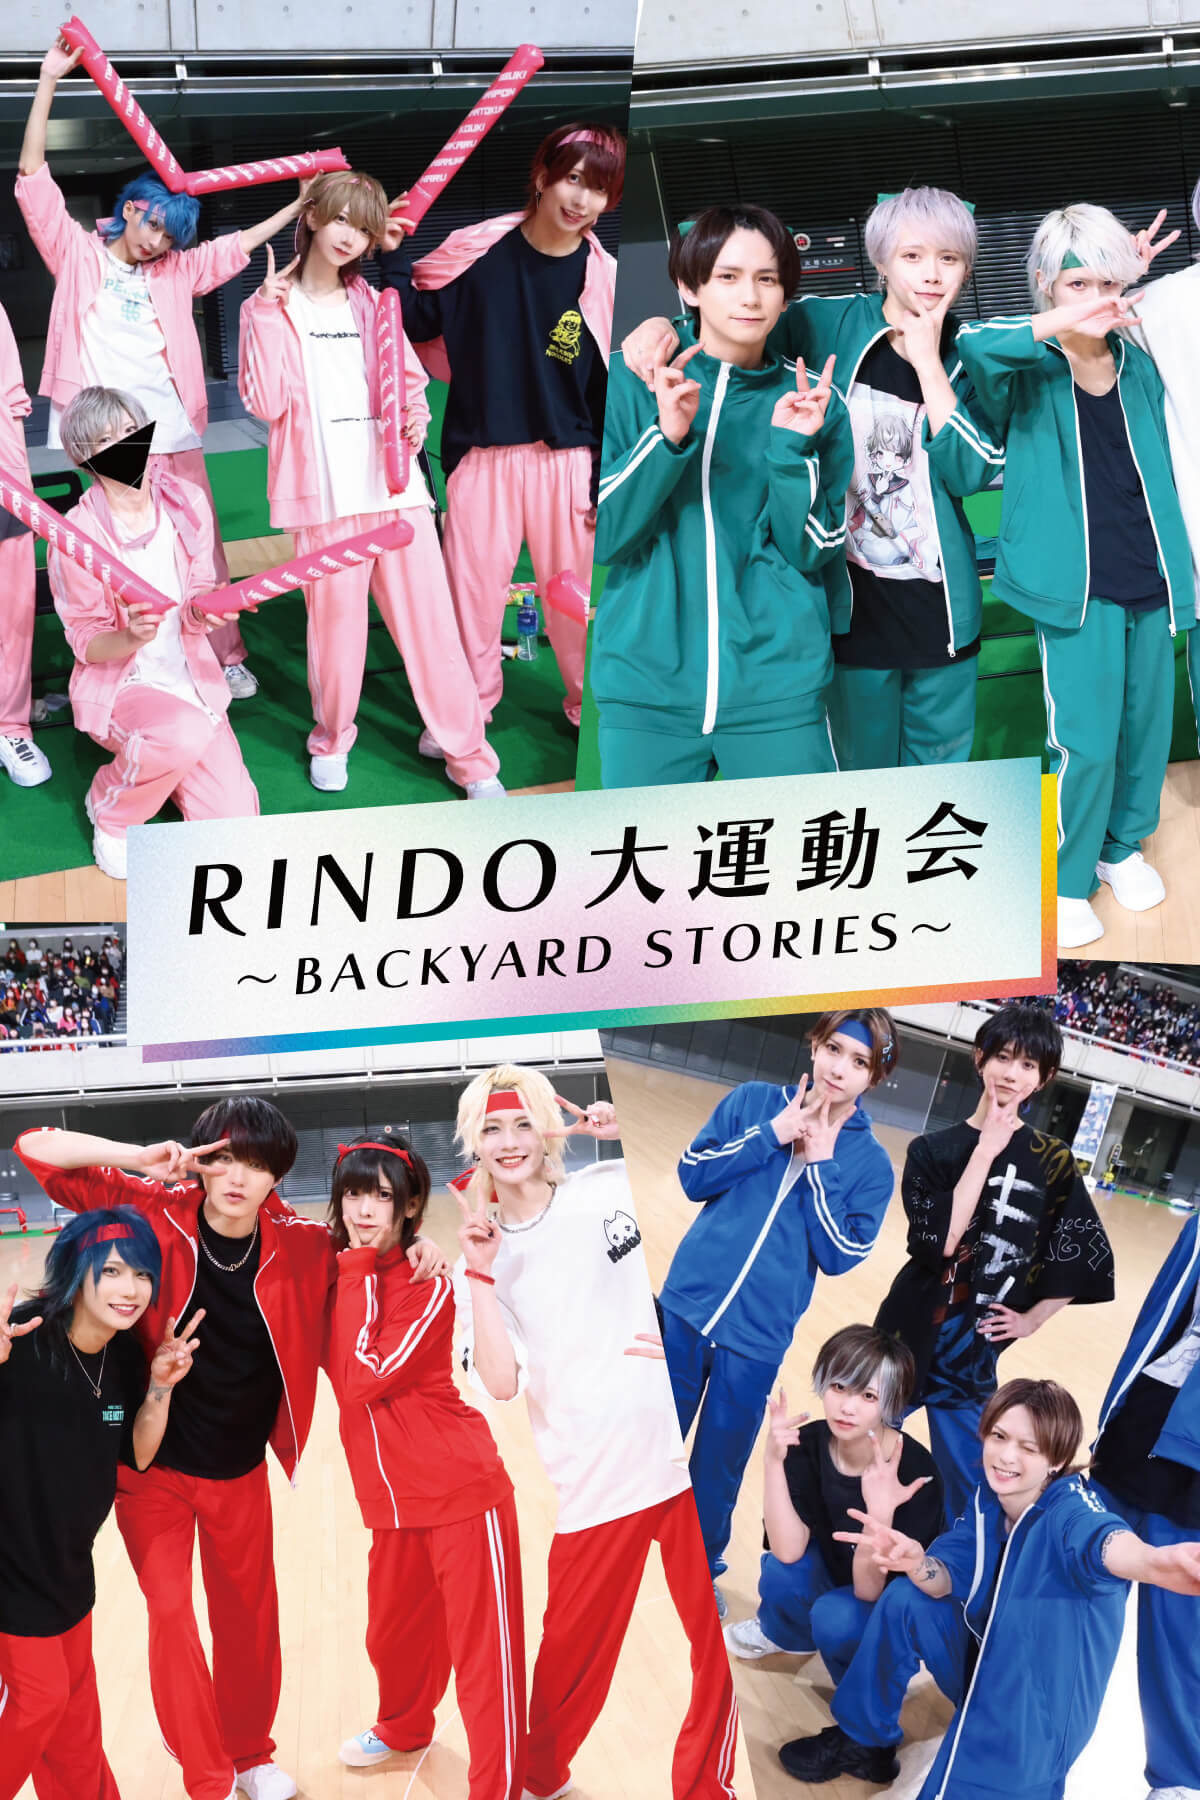 RINDO大運動会 〜BACKYARD STORIES〜											